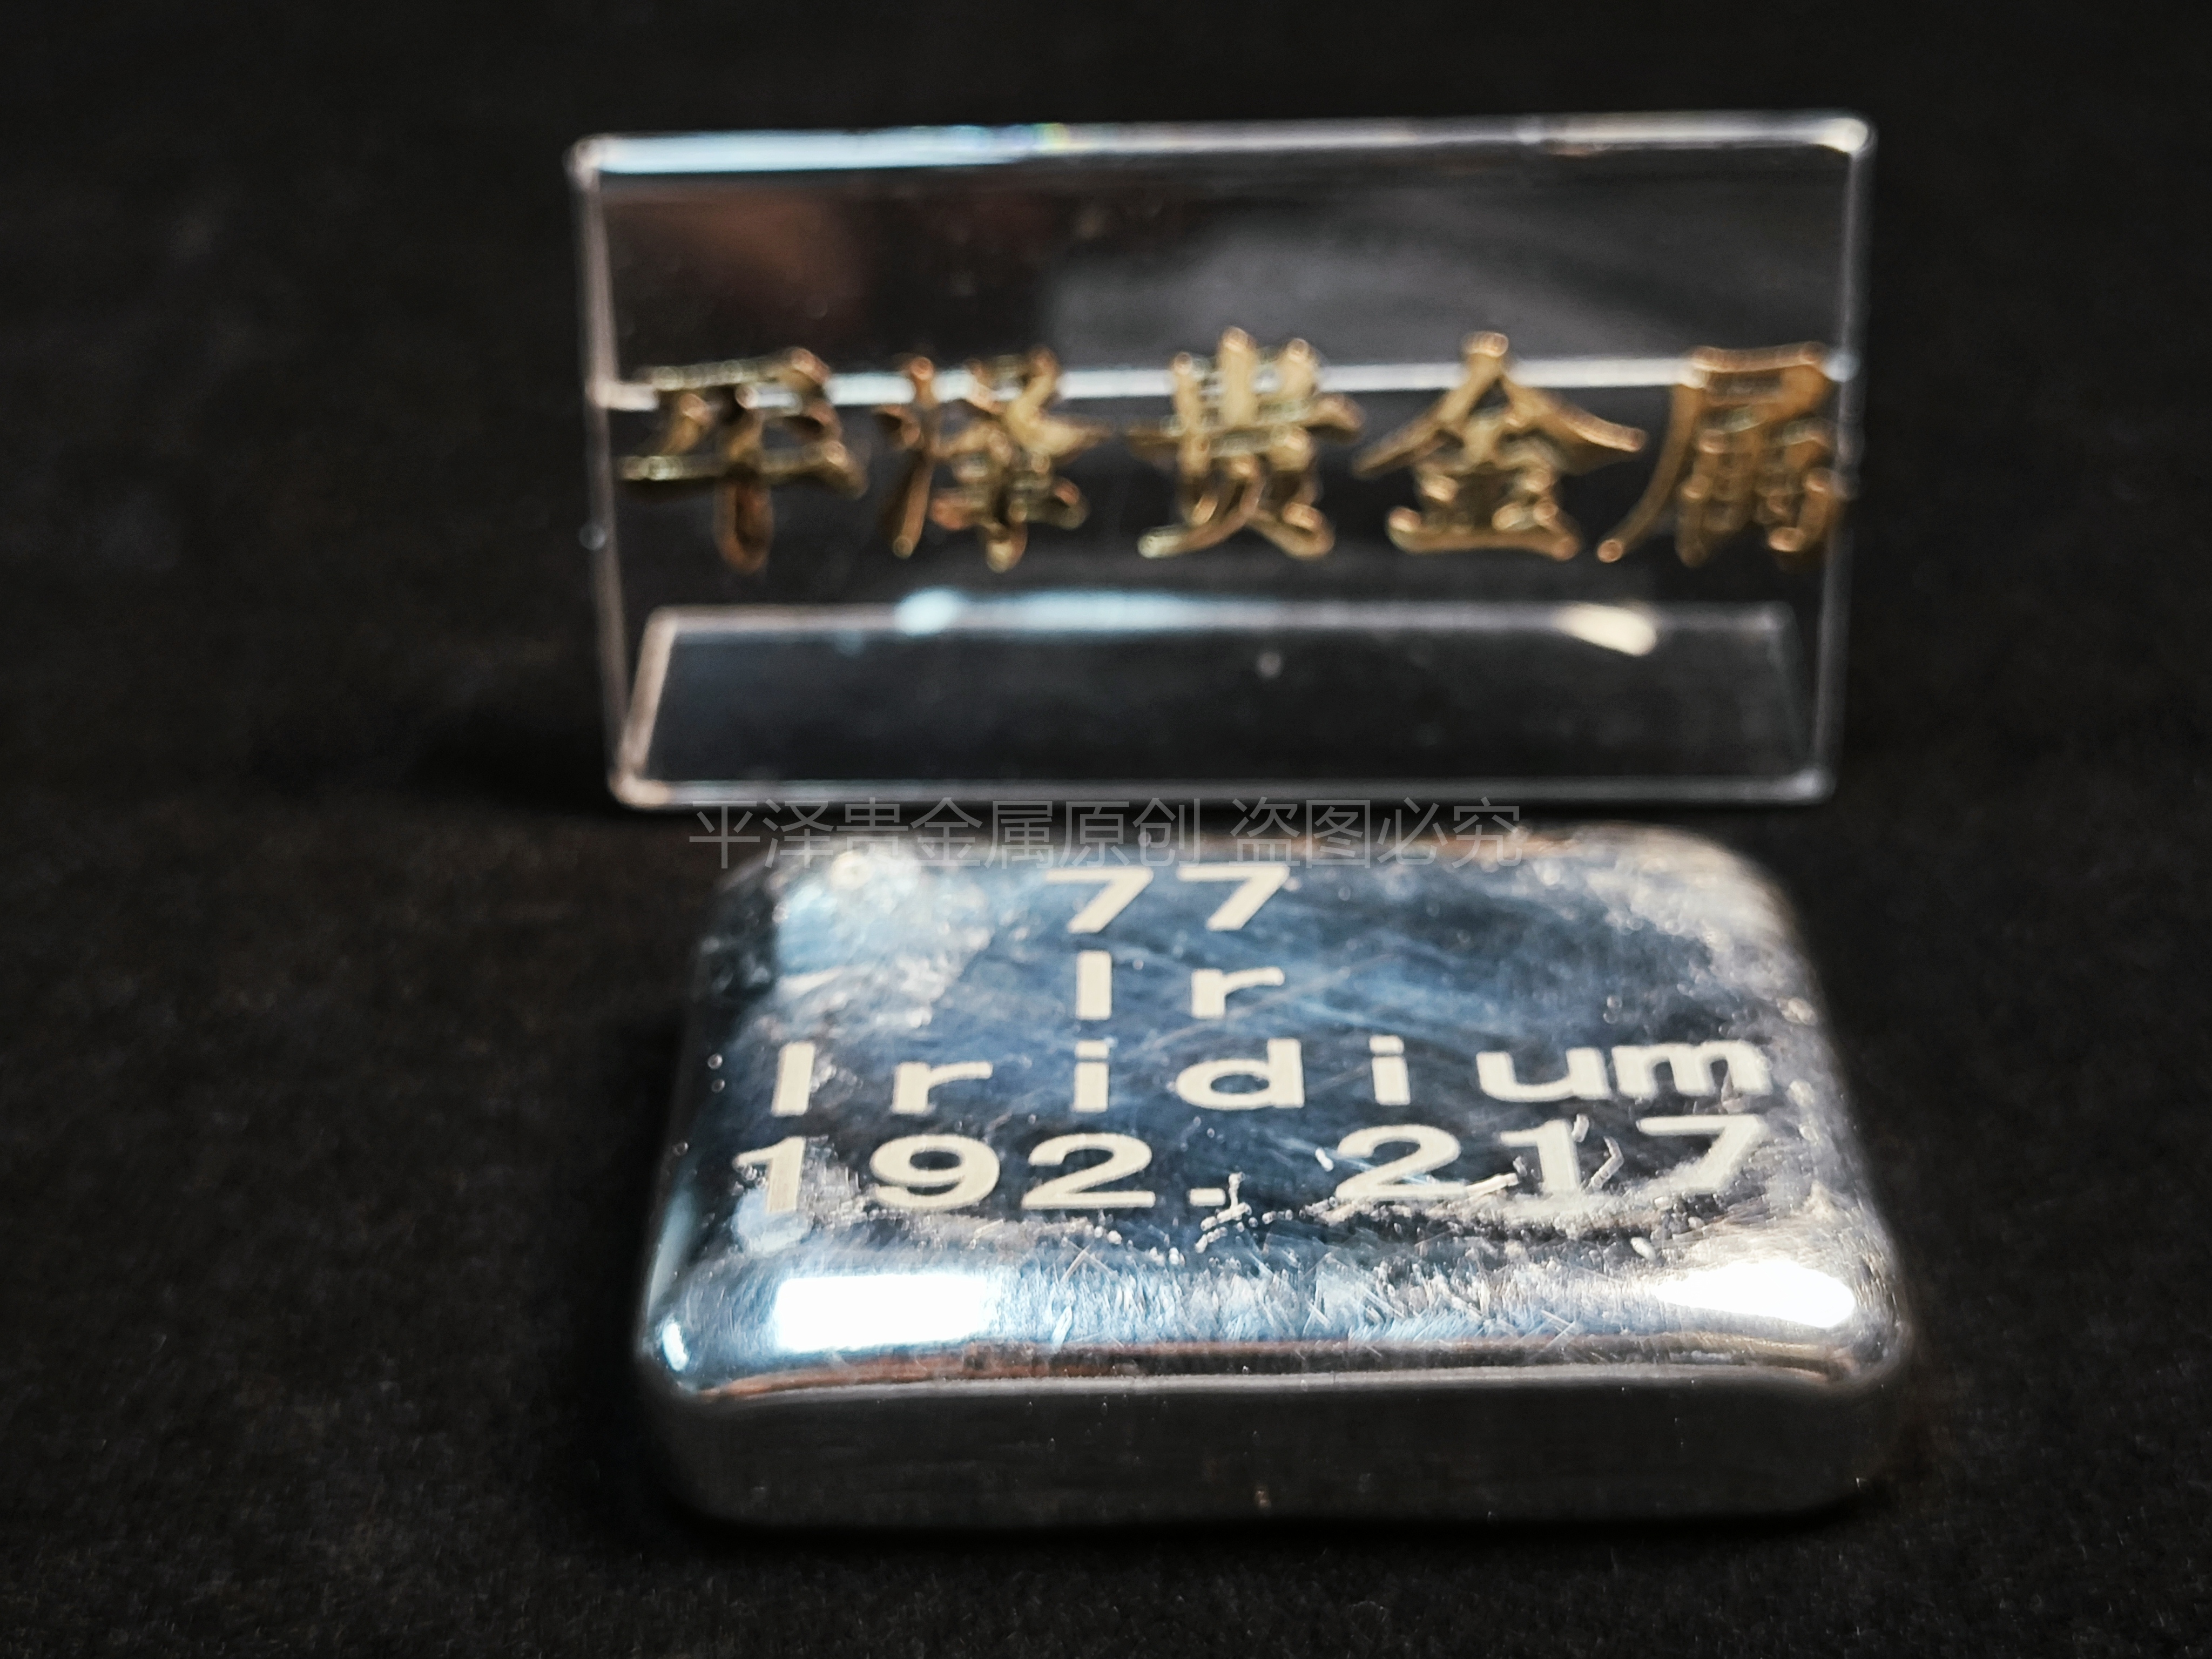 Price per kilogram of iridium with recycling examples from iridium jewelers